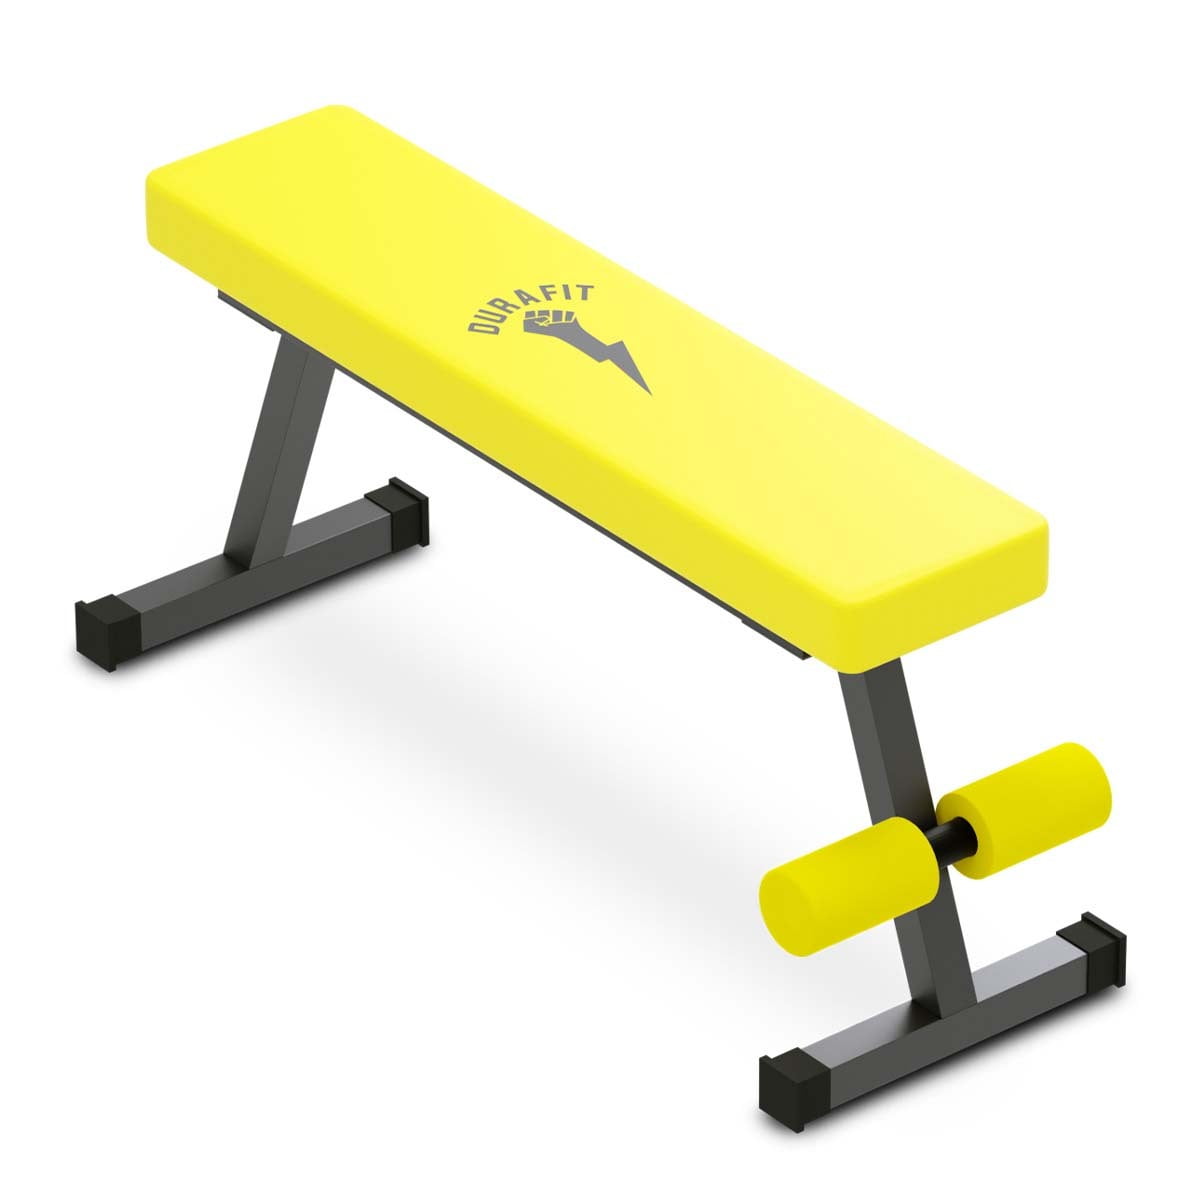 Durafit Simple Flat bench SB01-Yellow